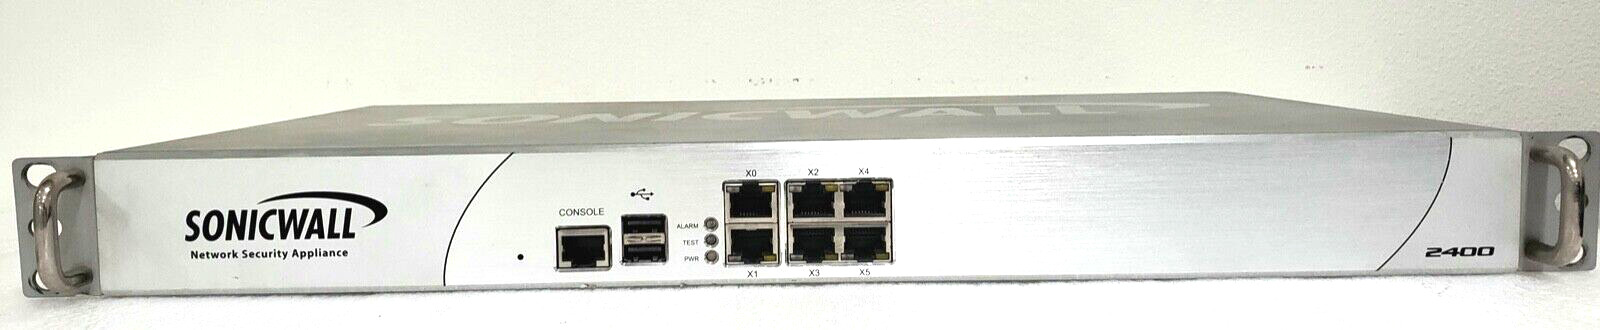 SonicWALL NSA 2400 Network Security Appliance Firewall 1RK25-084 - 